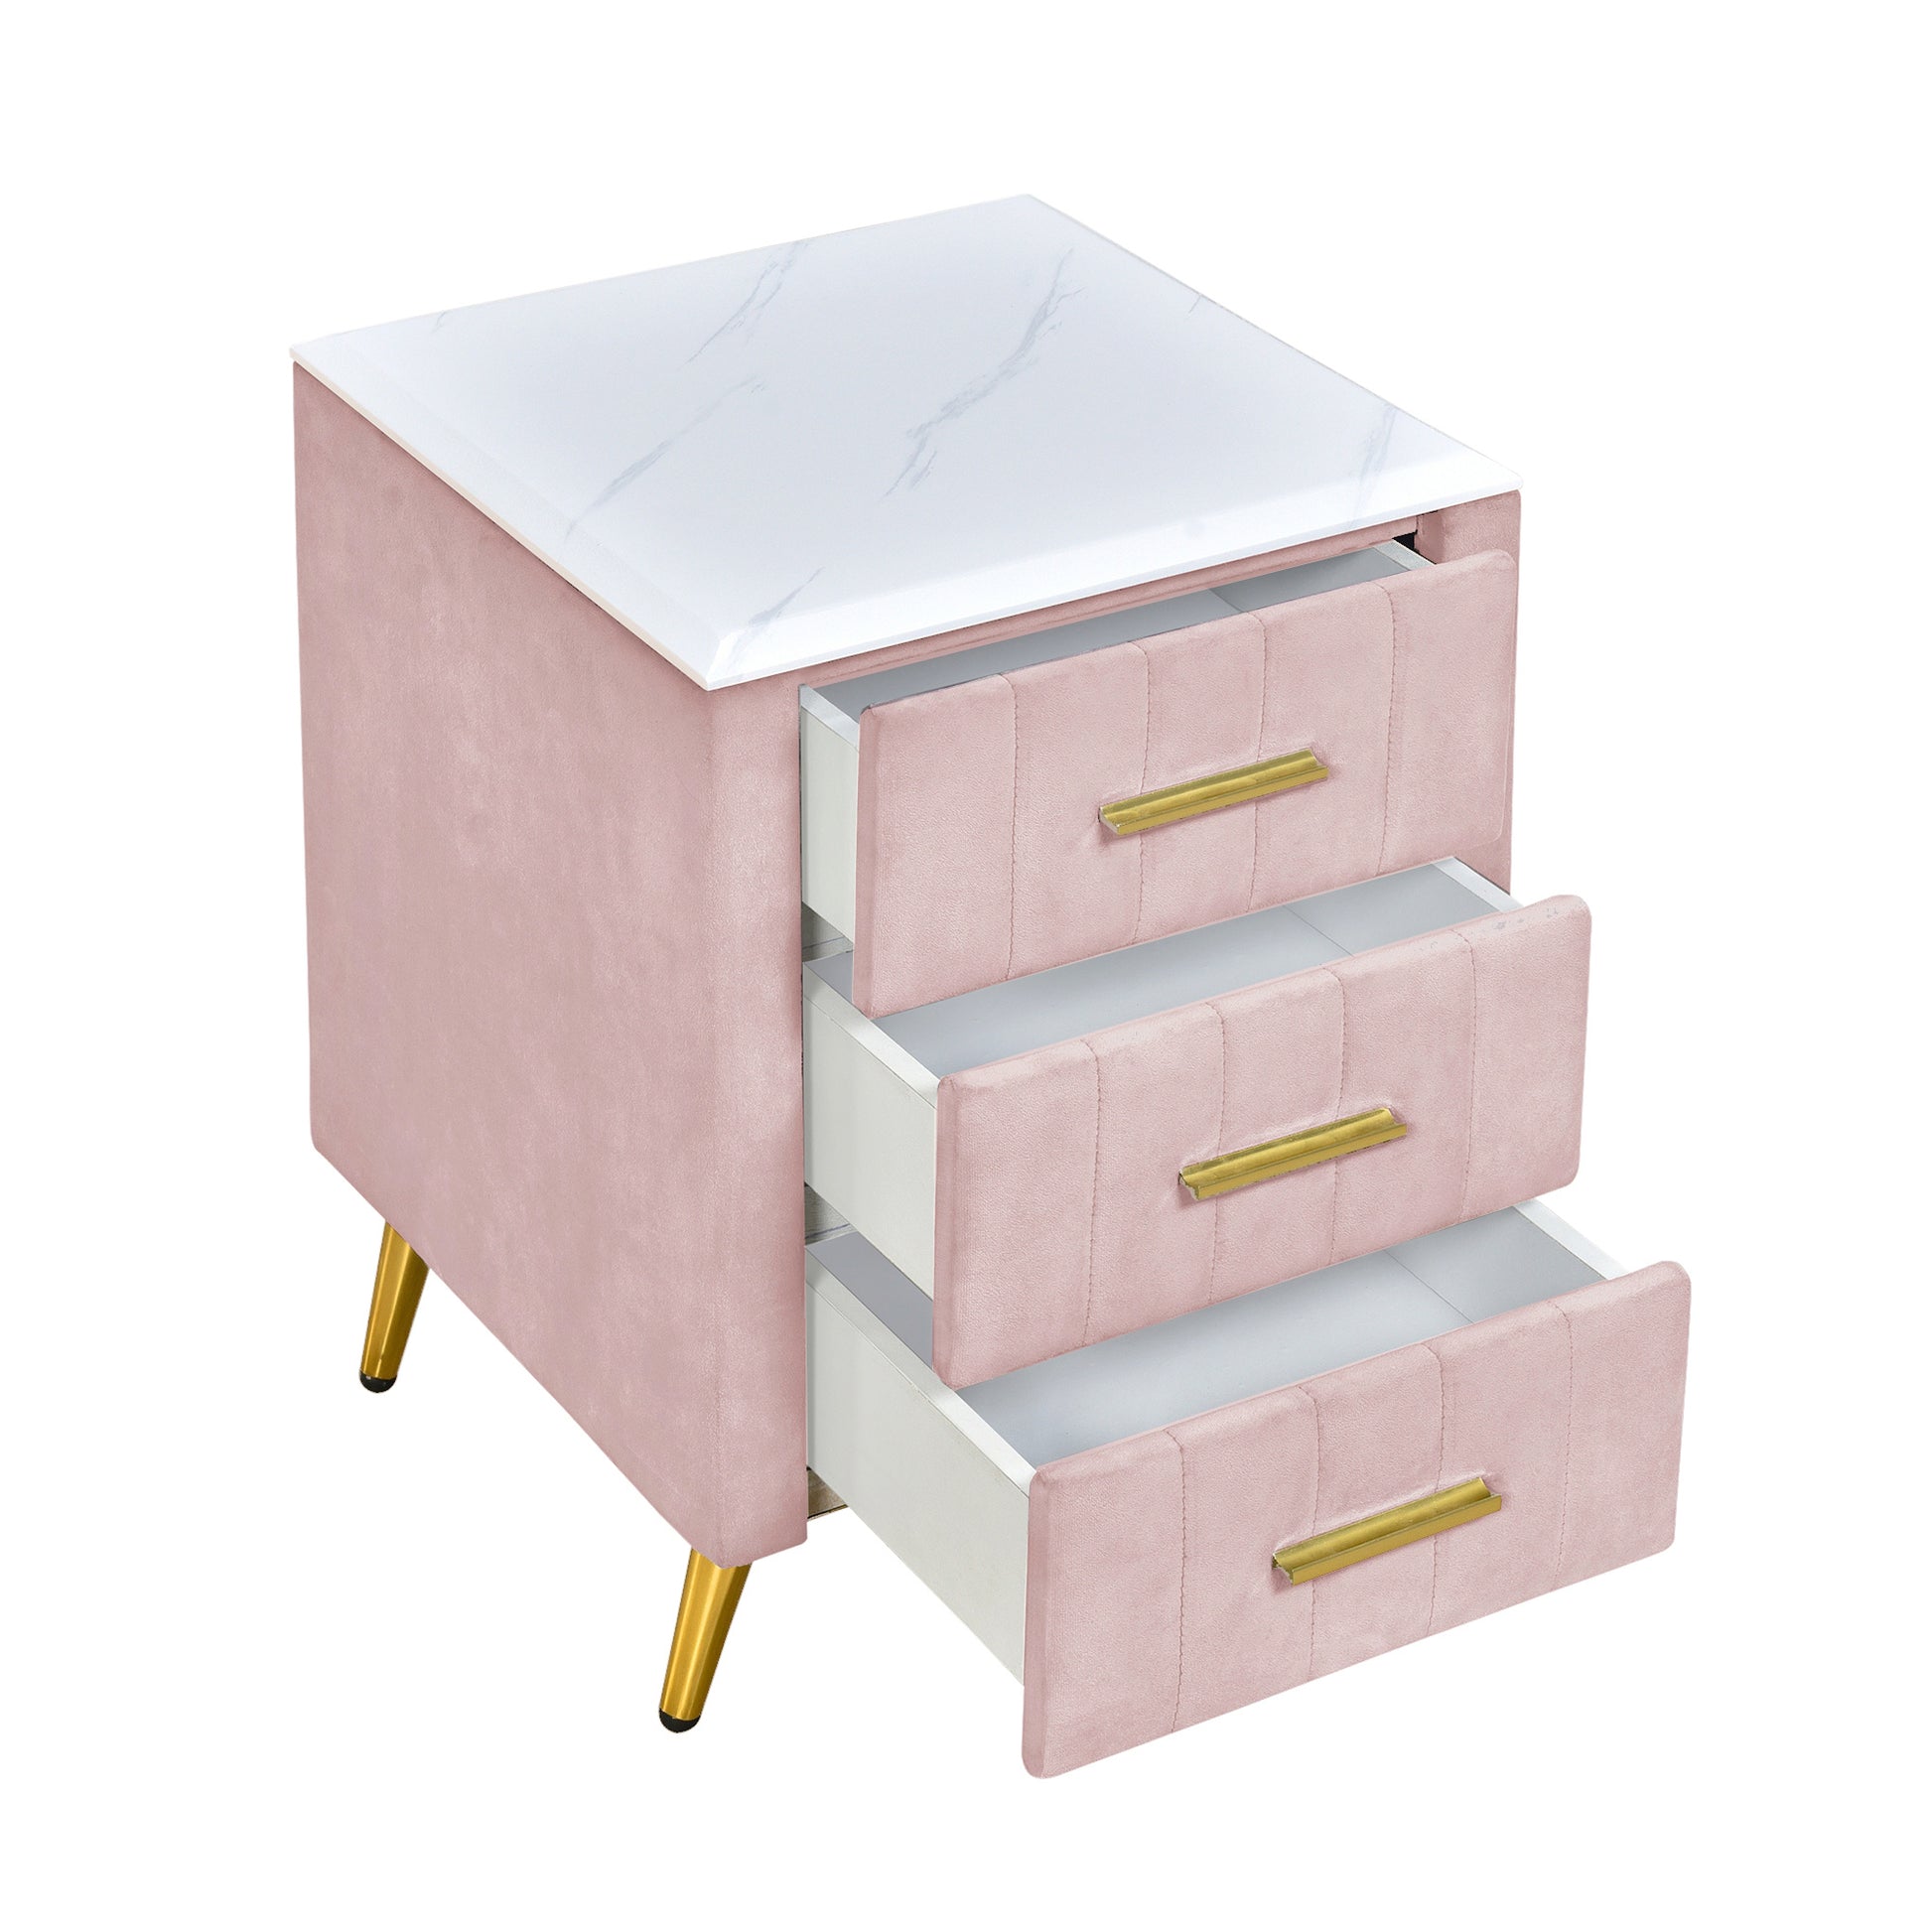 3-Pieces Bedroom Sets, Queen Size Upholstered Platform Bed with Two Nightstands, Nightstands with Marbling Worktop and Metal Legs&Handles, Velvet,Pink - Enova Luxe Home Store